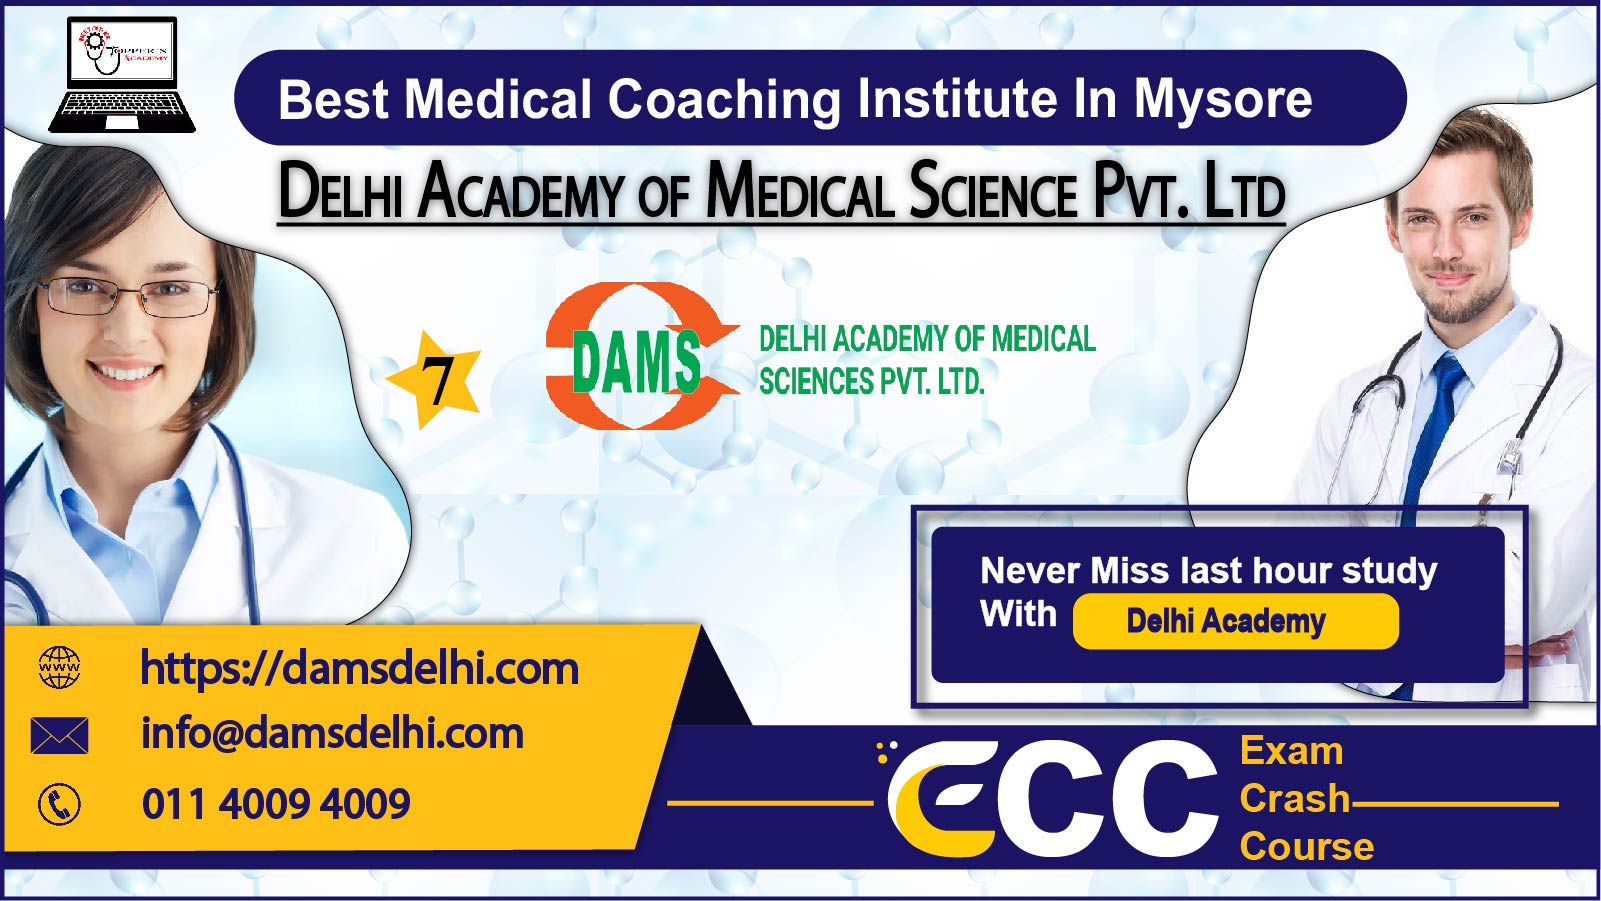 Delhi Academy of Medical Science Pvt. Ltd. in Mysore